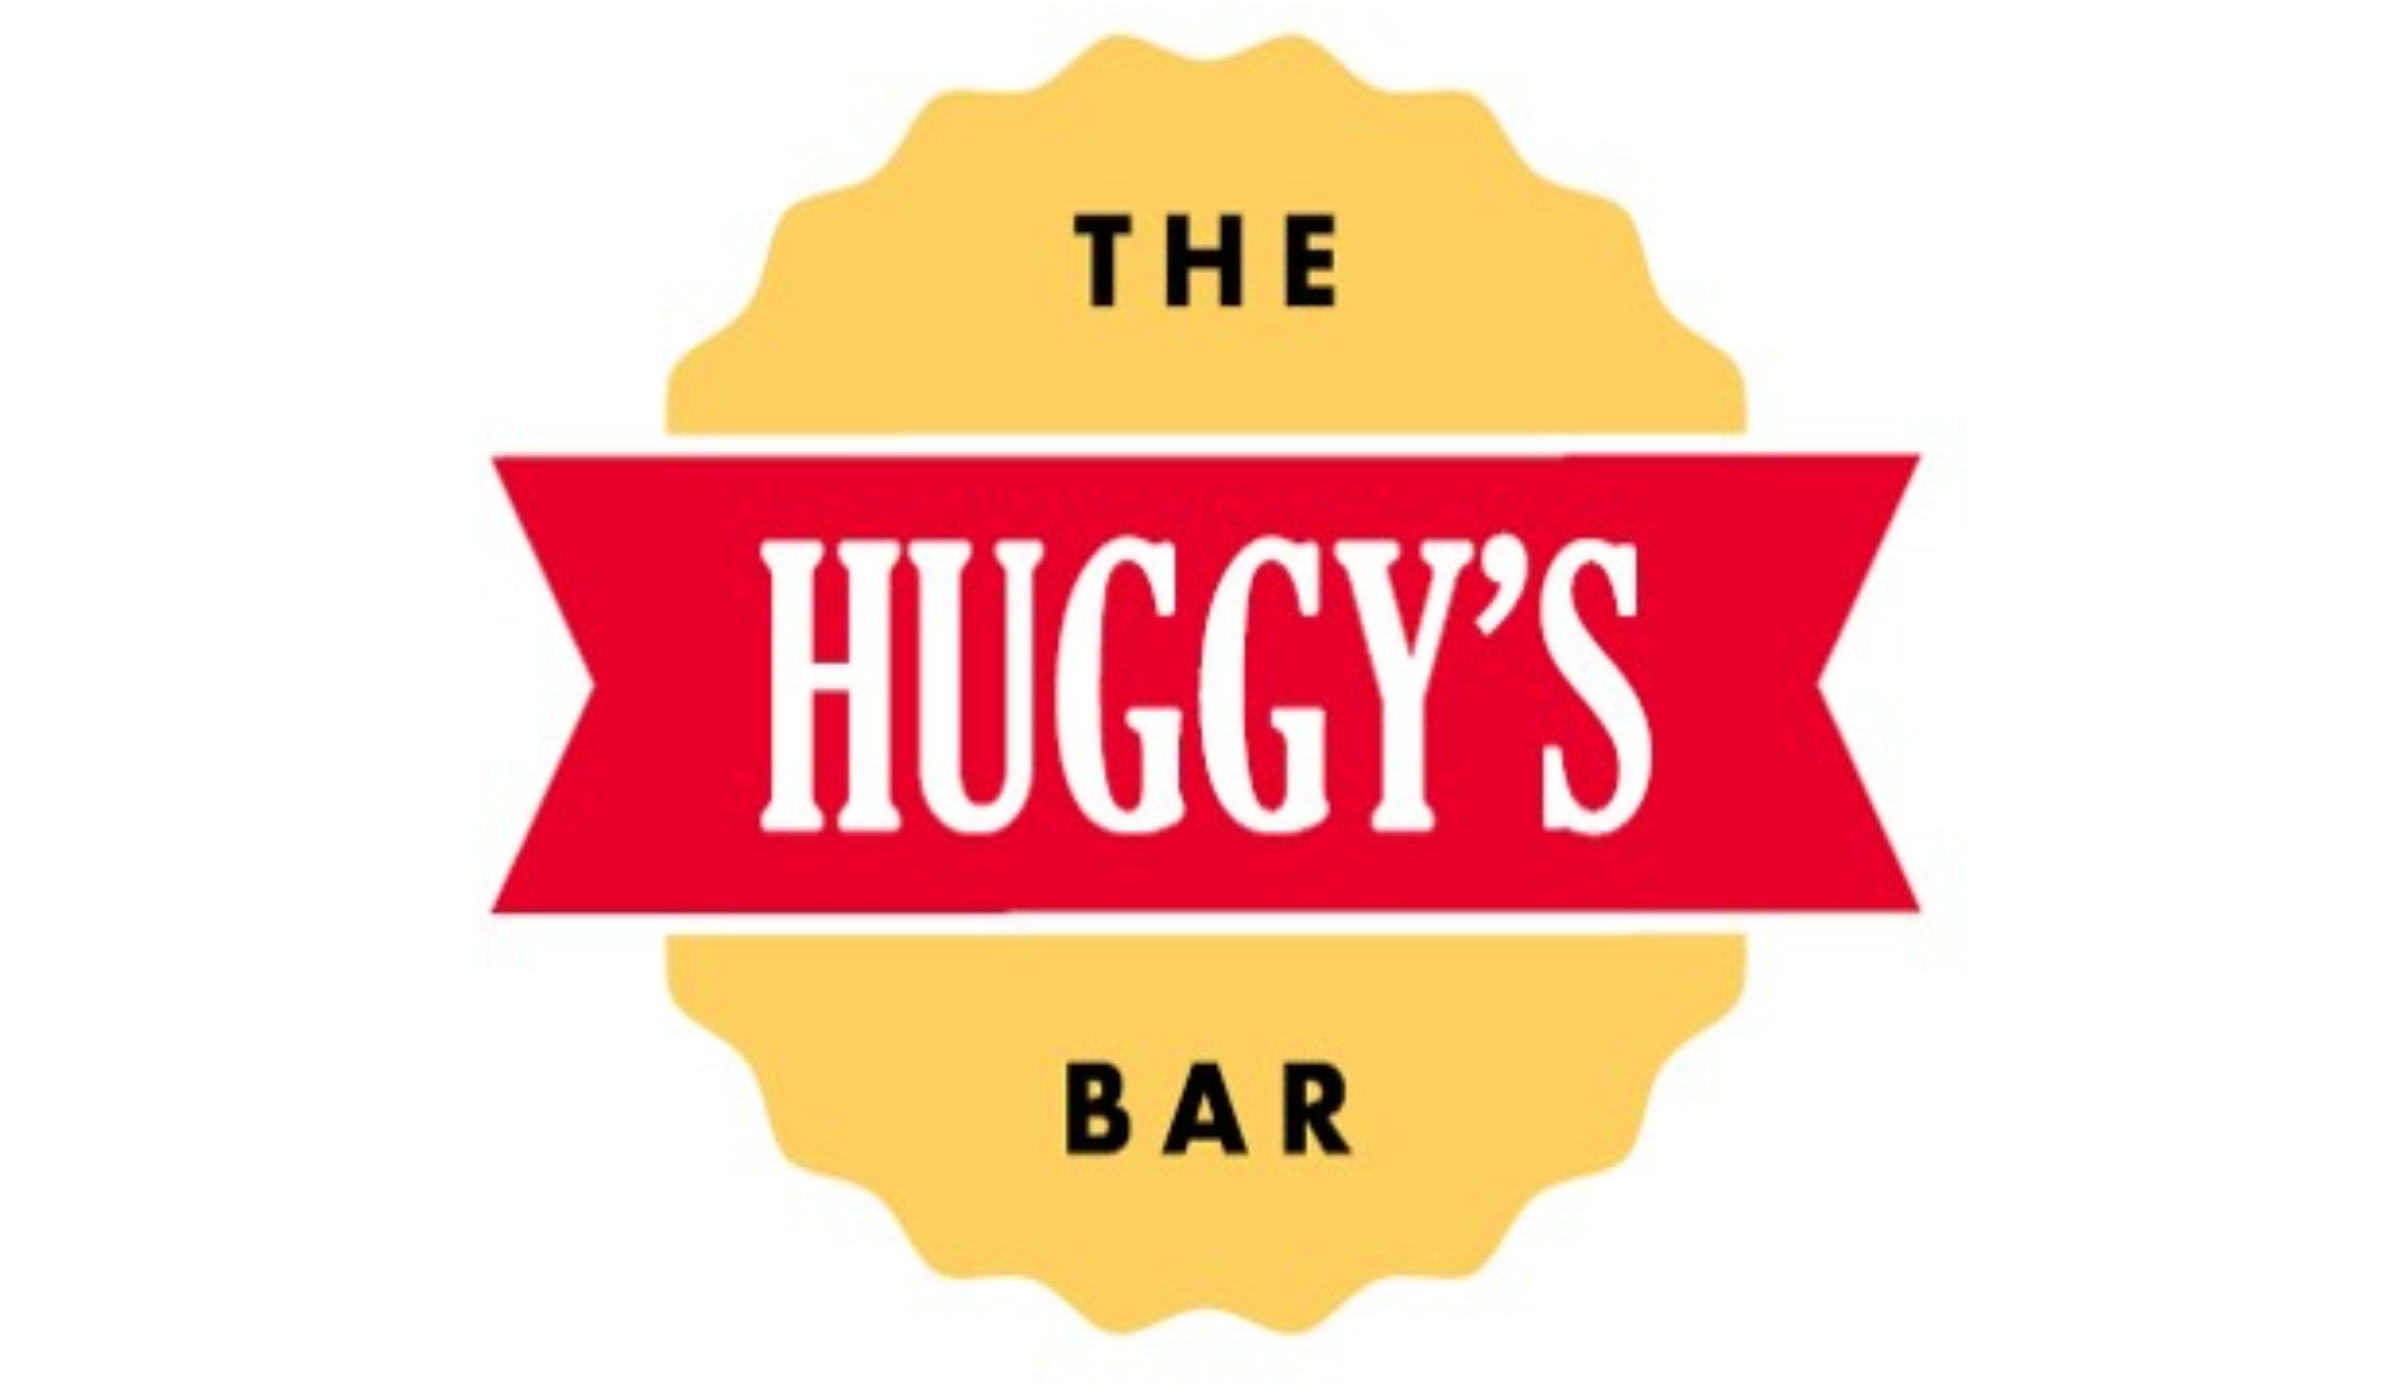 The Huggy's Bar - Christmas shop